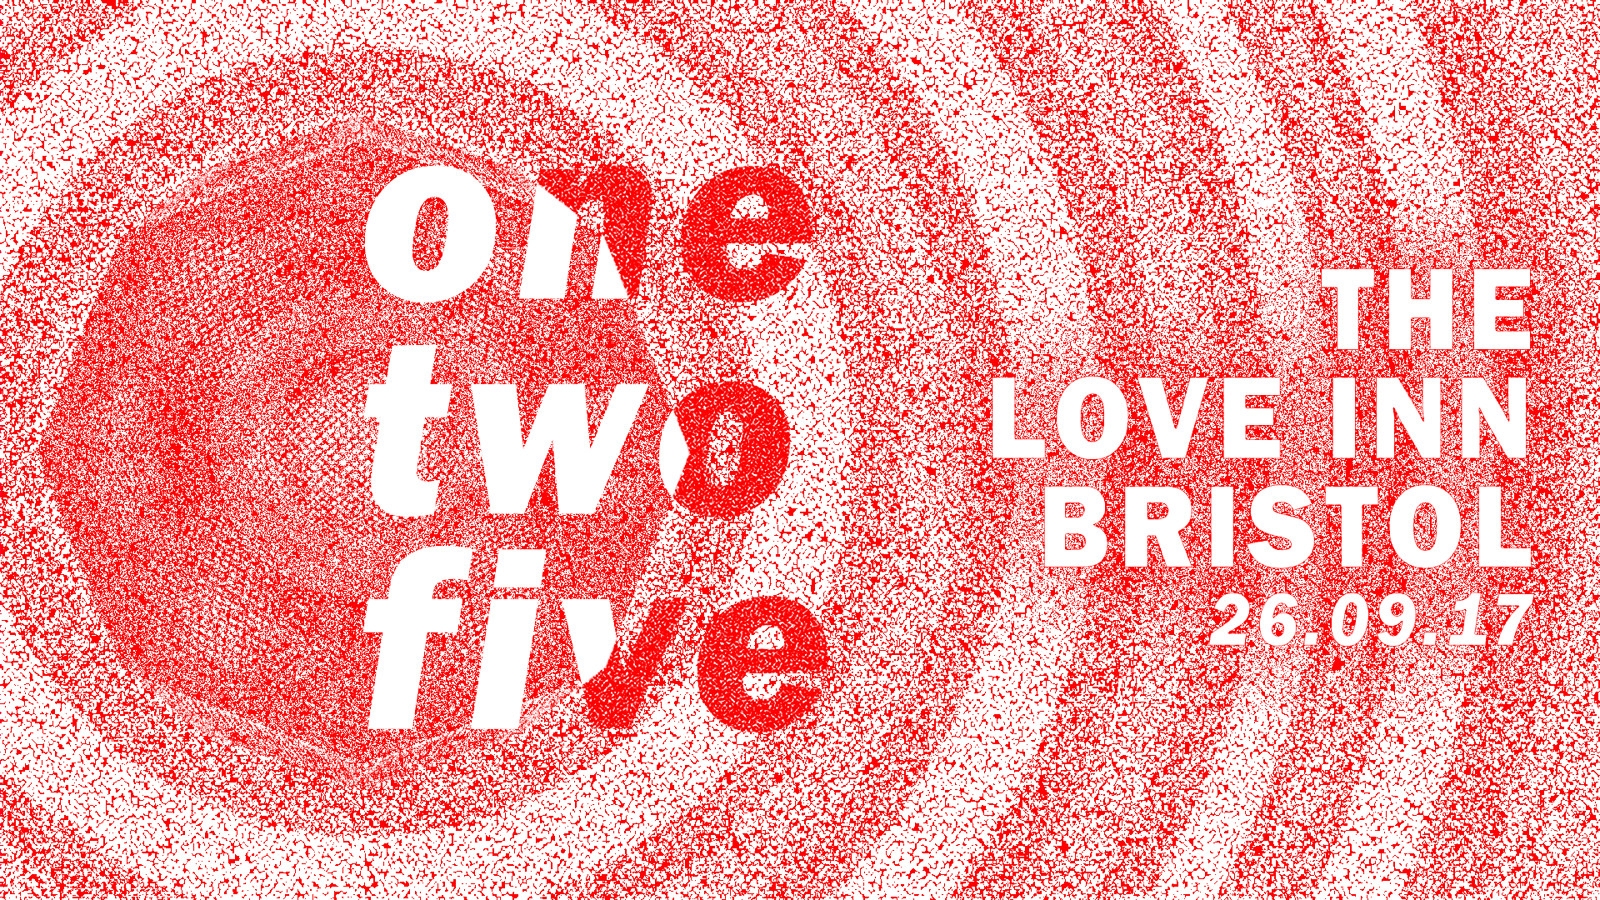 One Two Five Presents Love Inn at The Love Inn